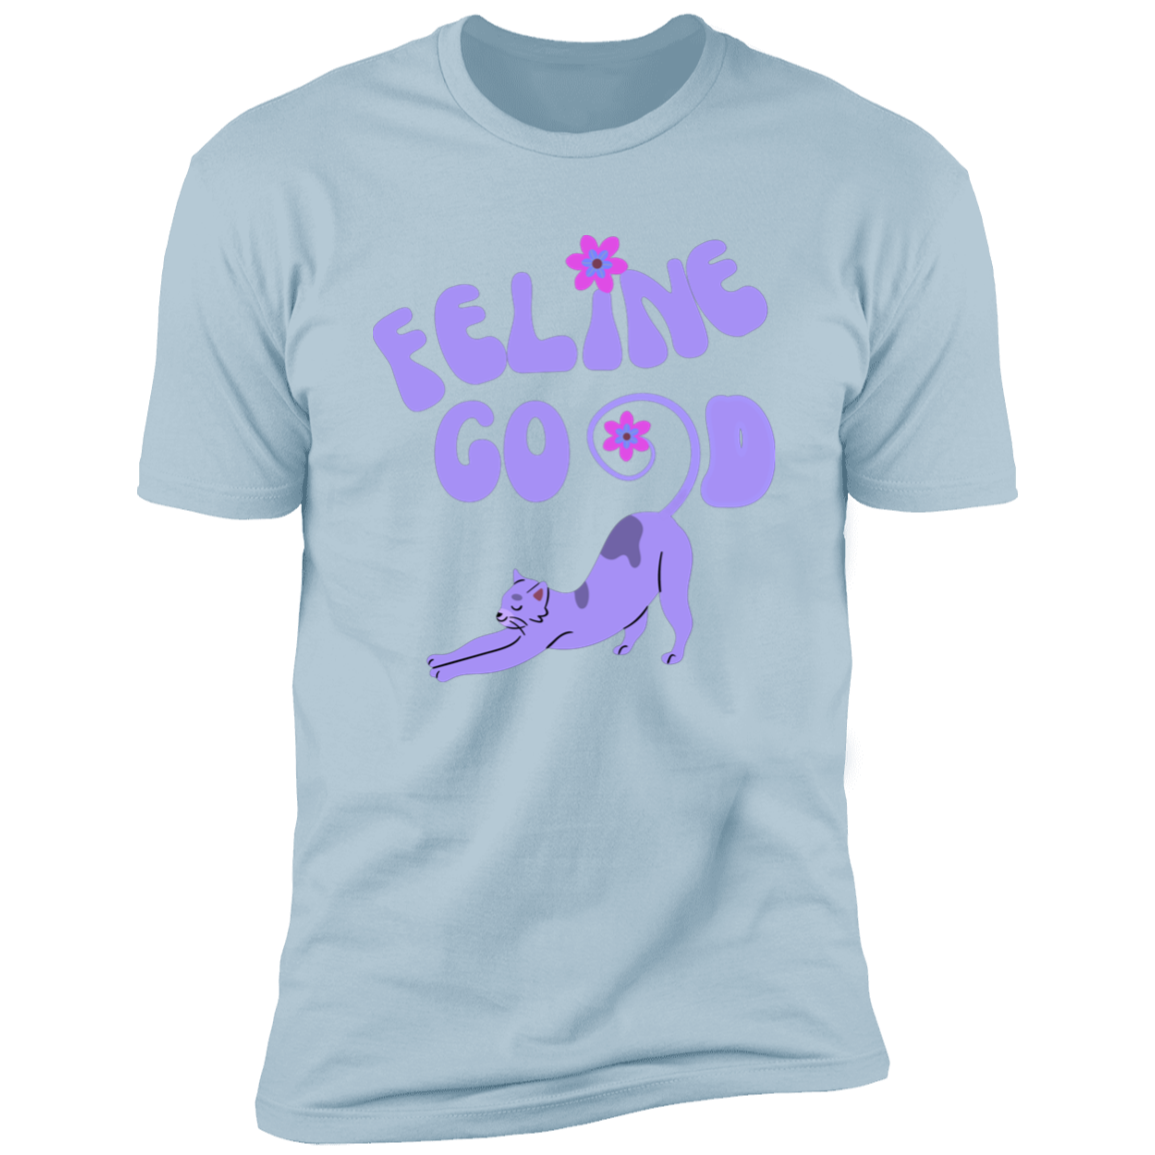 Feline Good Cat T-Shirt, Cat Shirt for humans, in light blue